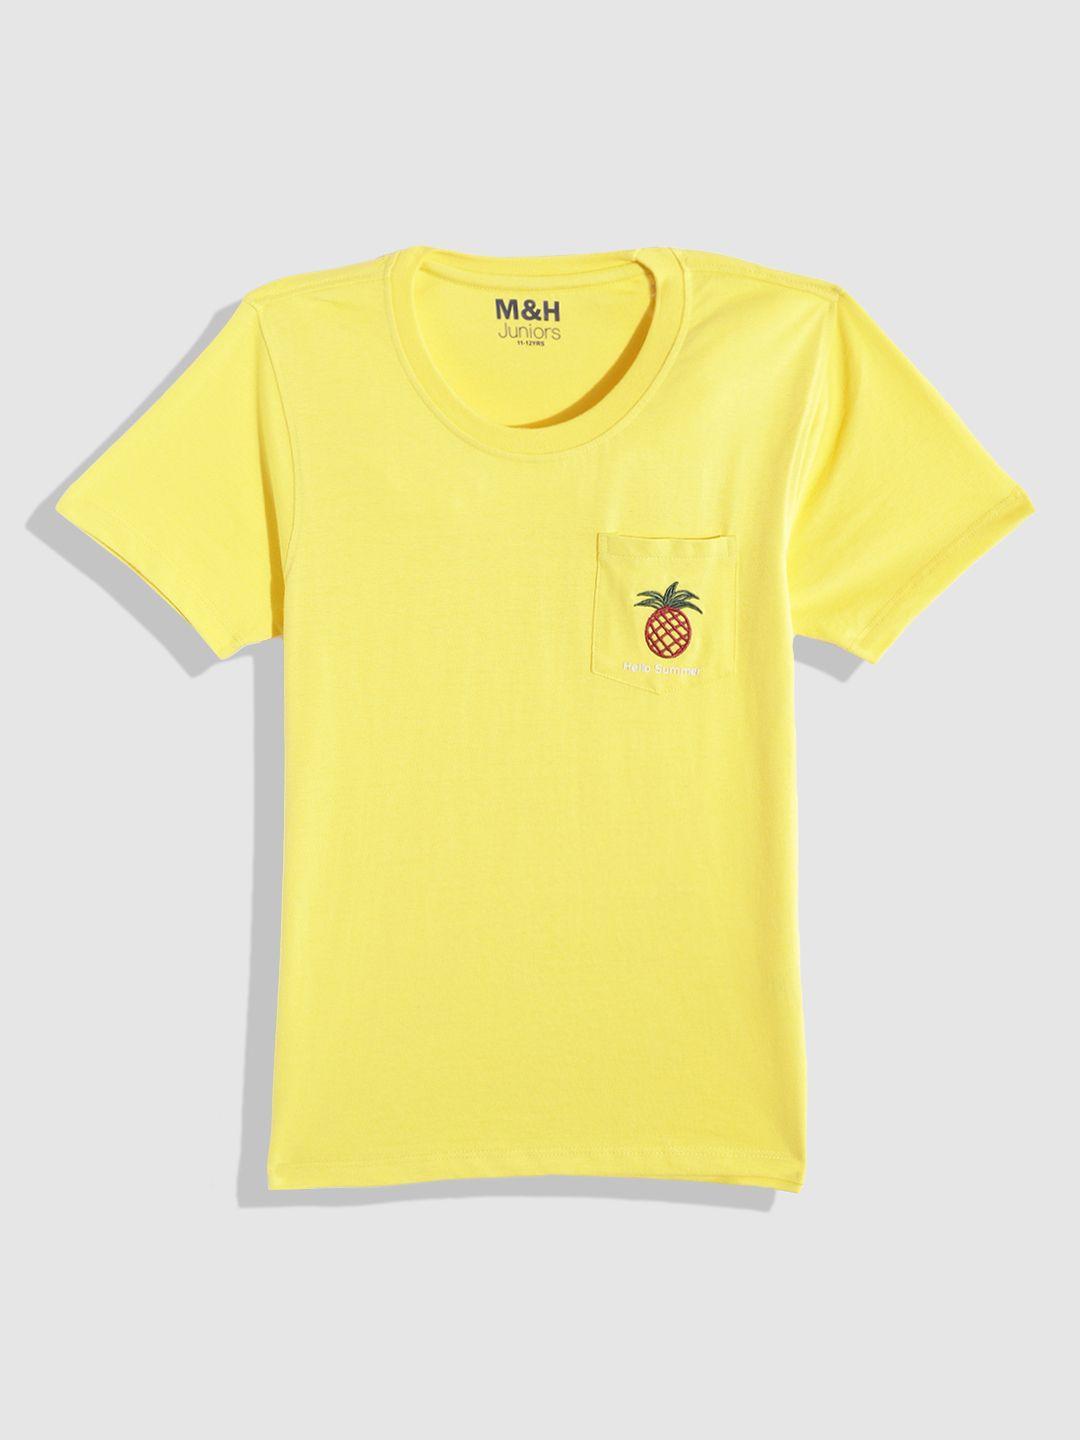 m&h juniors boys yellow solid t-shirt